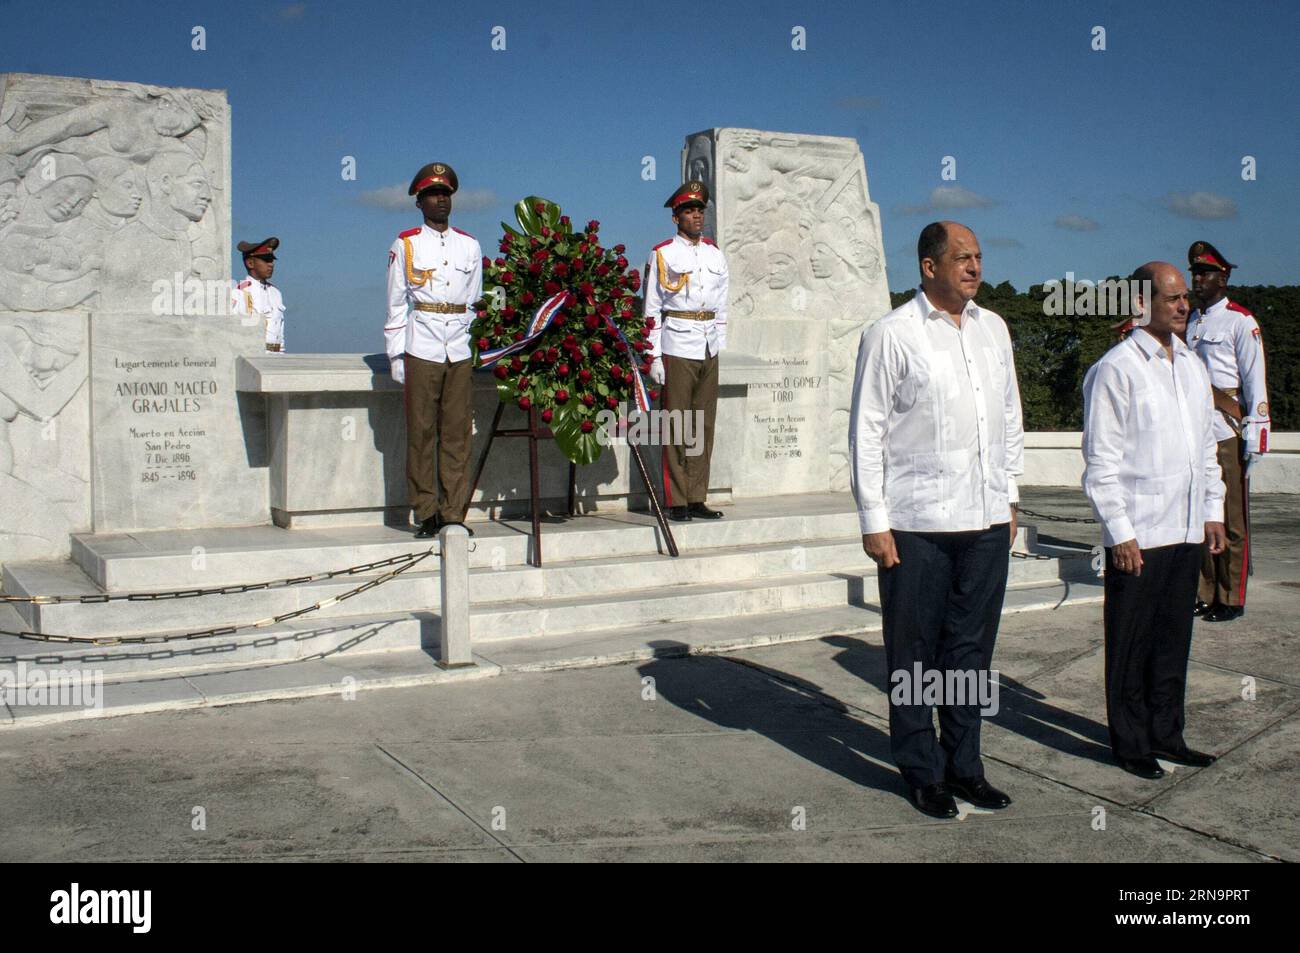 (151215) -- HAVANA, Dec. 15, 2015 -- Visiting Costa Rican President Luis Guillermo Solis (L, front) and Cuba s Vice Foreign Minister Rogelio Sierra (R, front) attend a wreath ceremony held at Mausoleo de Antonio Maceo in El Cacahual Monument, in Havana, Cuba, Dec. 15, 2015. ) (jg) (ah) CUBA-HAVANA-COSTA RICA-POLITICS-VISIT STR PUBLICATIONxNOTxINxCHN   151215 Havana DEC 15 2015 Visiting Costa Rican President Luis Guillermo Solis l Front and Cuba S Vice Foreign Ministers Rogelio Sierra r Front attend a Wreath Ceremony Hero AT Mausoleo de Antonio Maceo in El  Monument in Havana Cuba DEC 15 2015 J Stock Photo